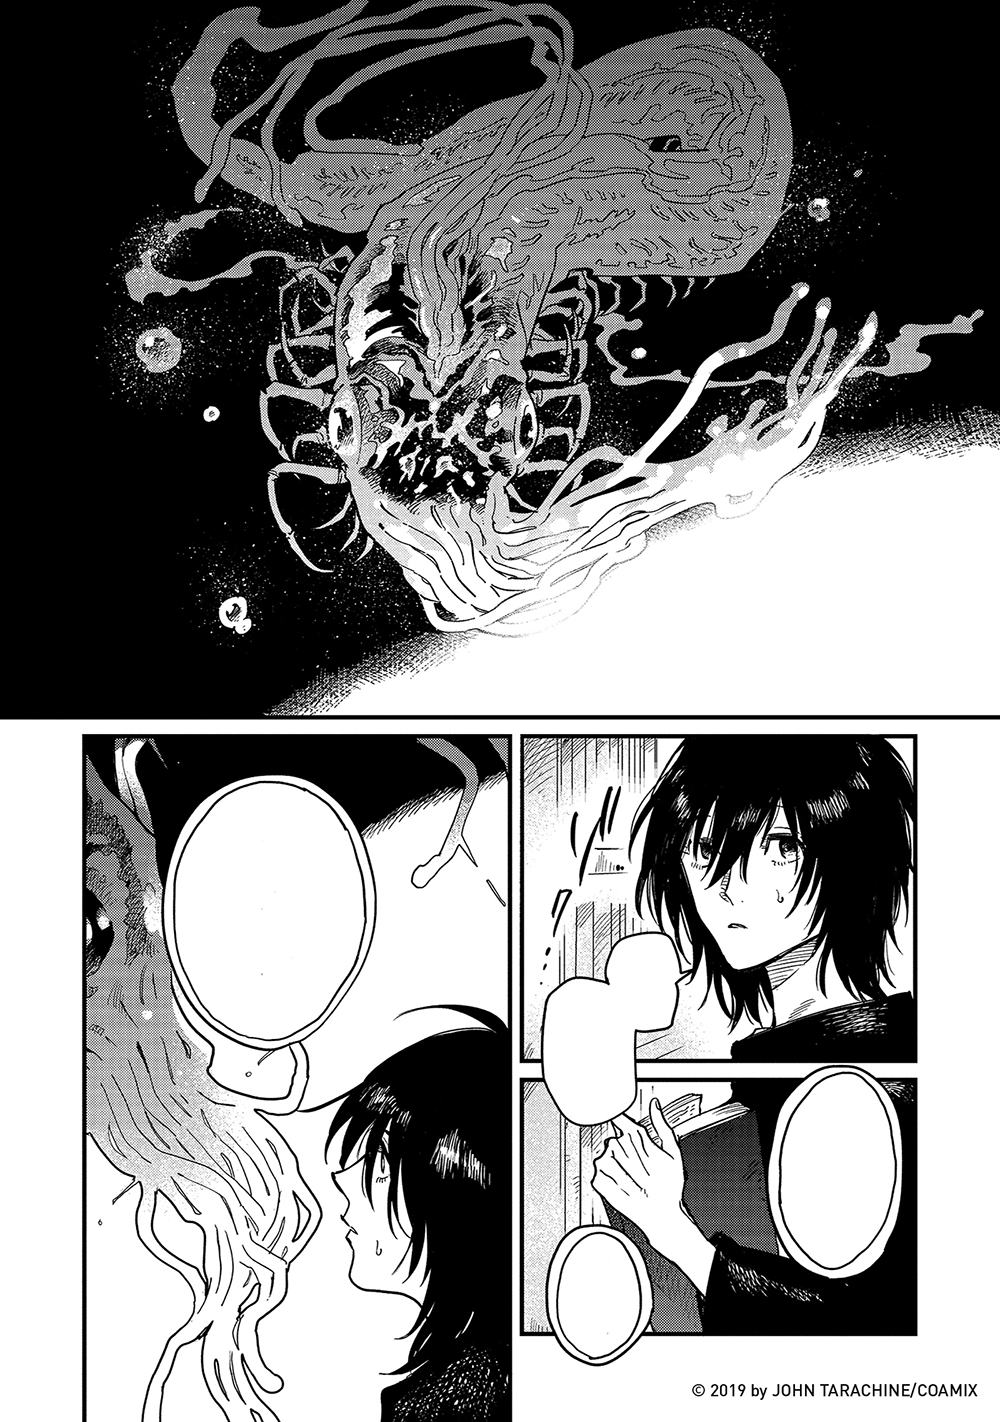 Vol. 1 from Titan Manga